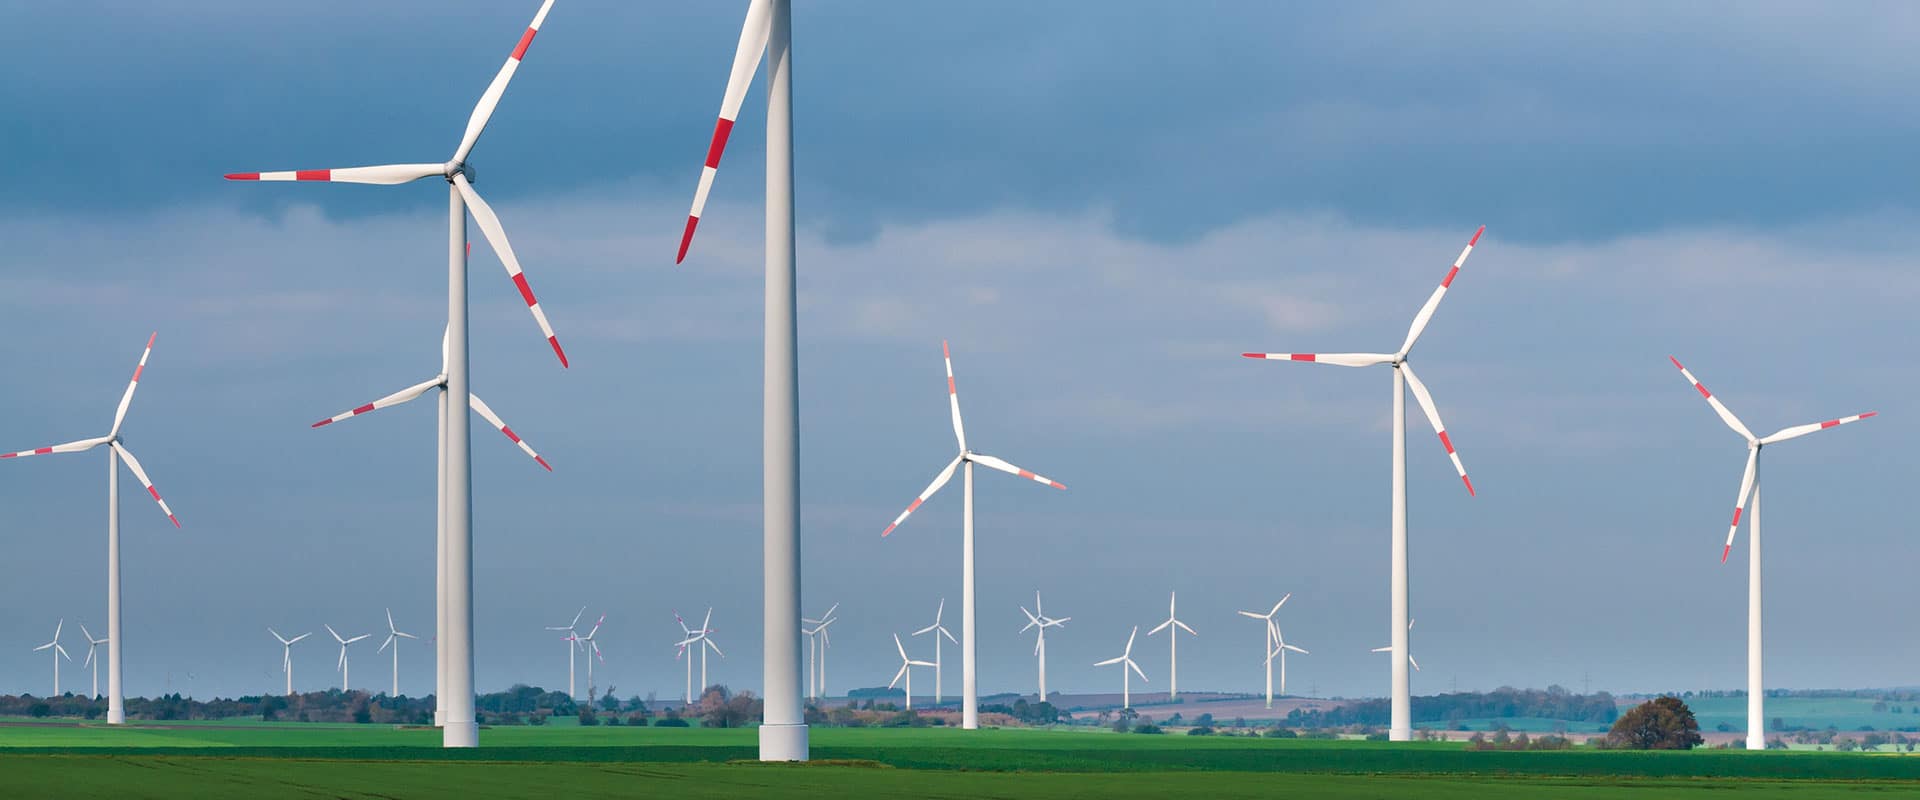 Windenergie - Erneuerbare Energien